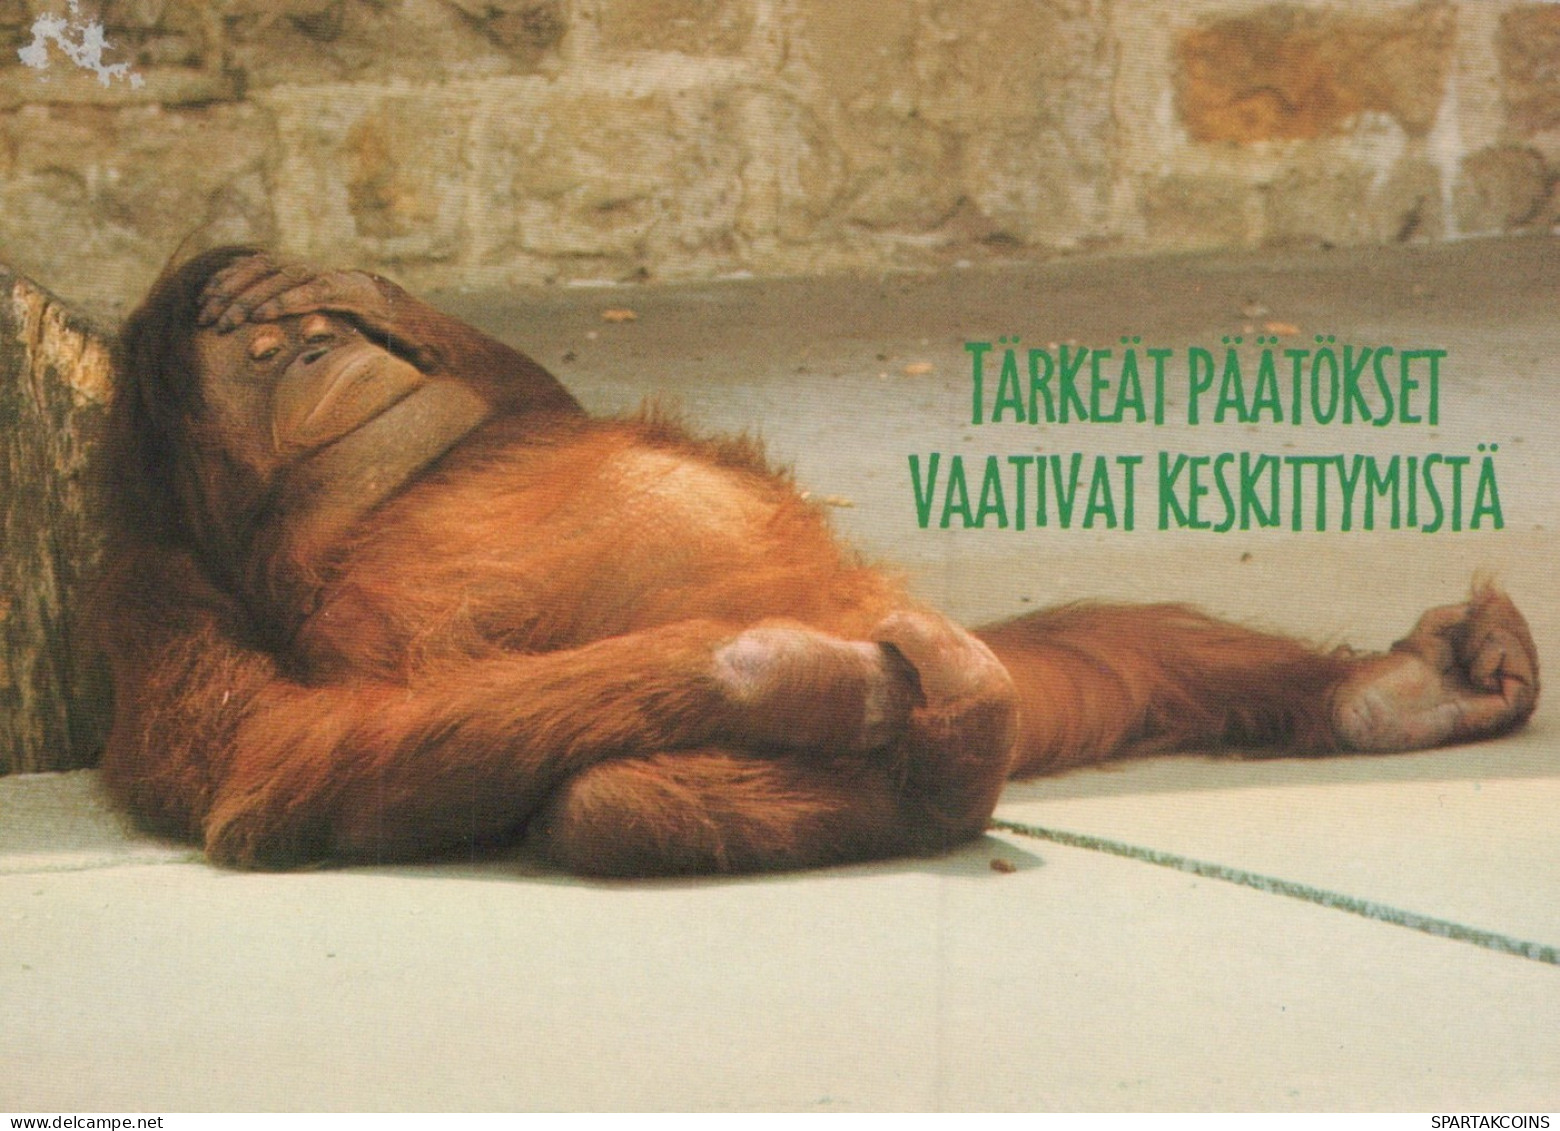 SCIMMIA Animale Vintage Cartolina CPSM #PAN984.A - Scimmie